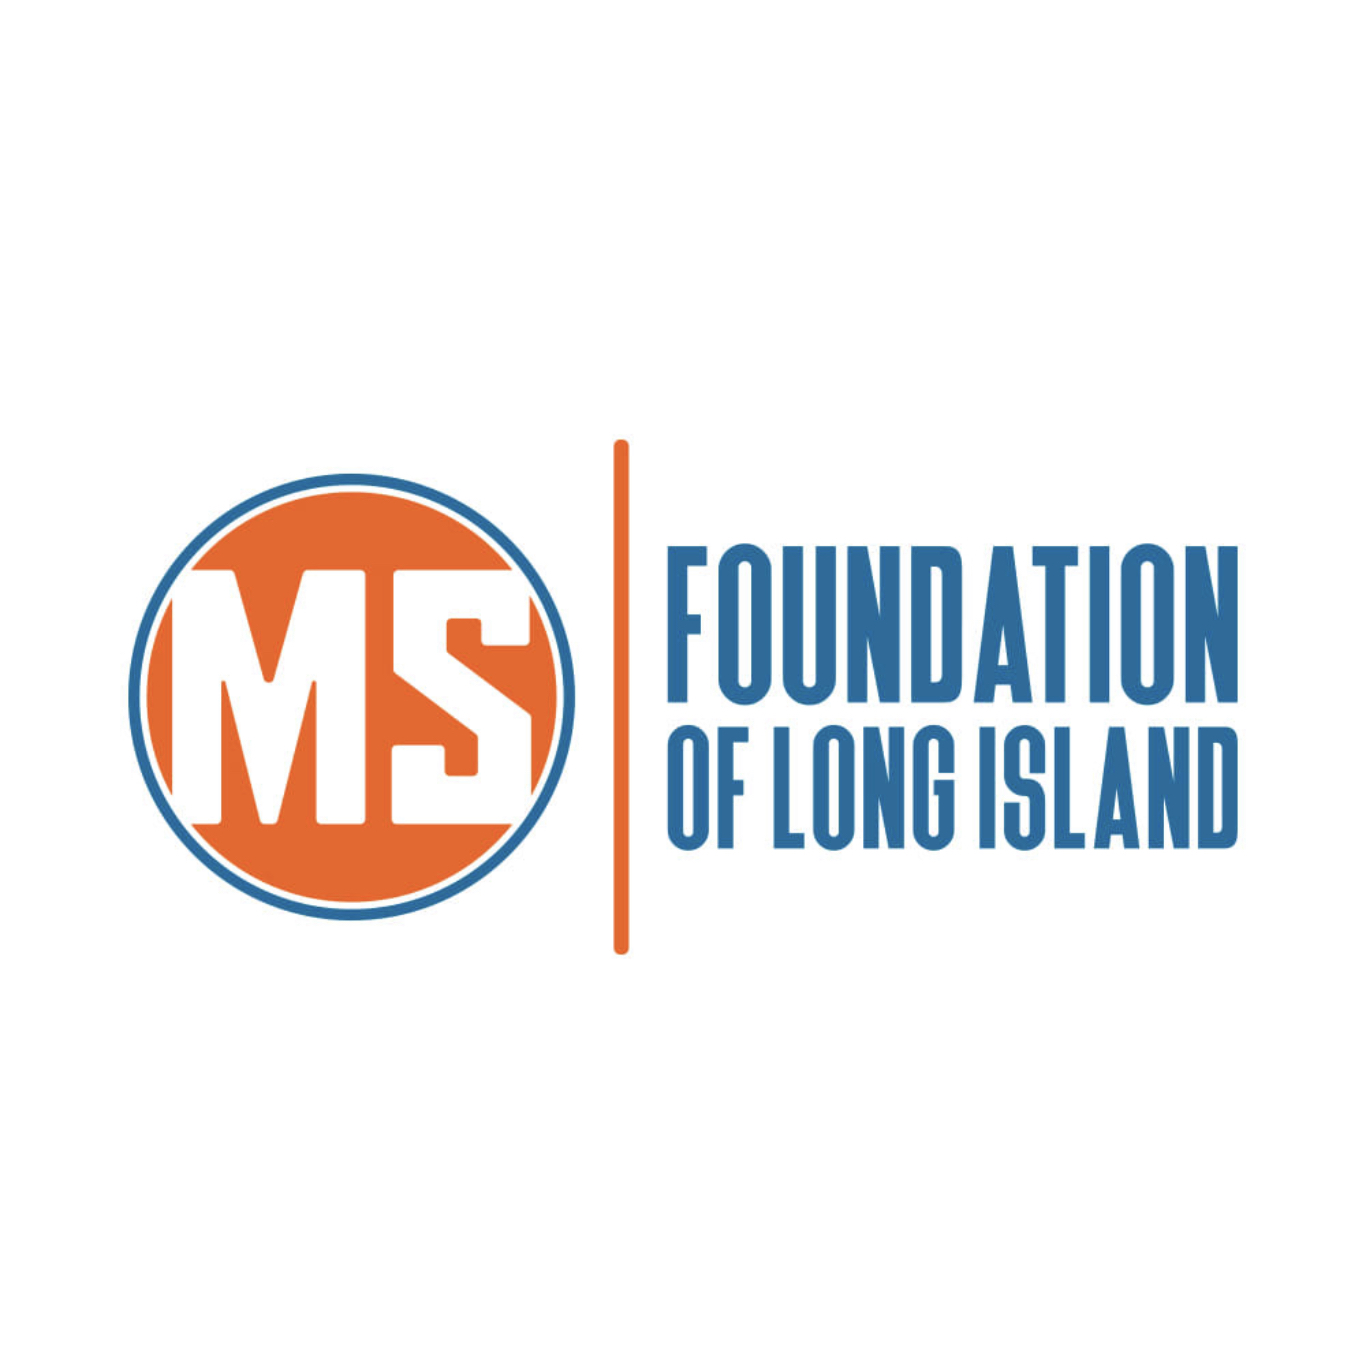 MS Foundation of Long Island logo